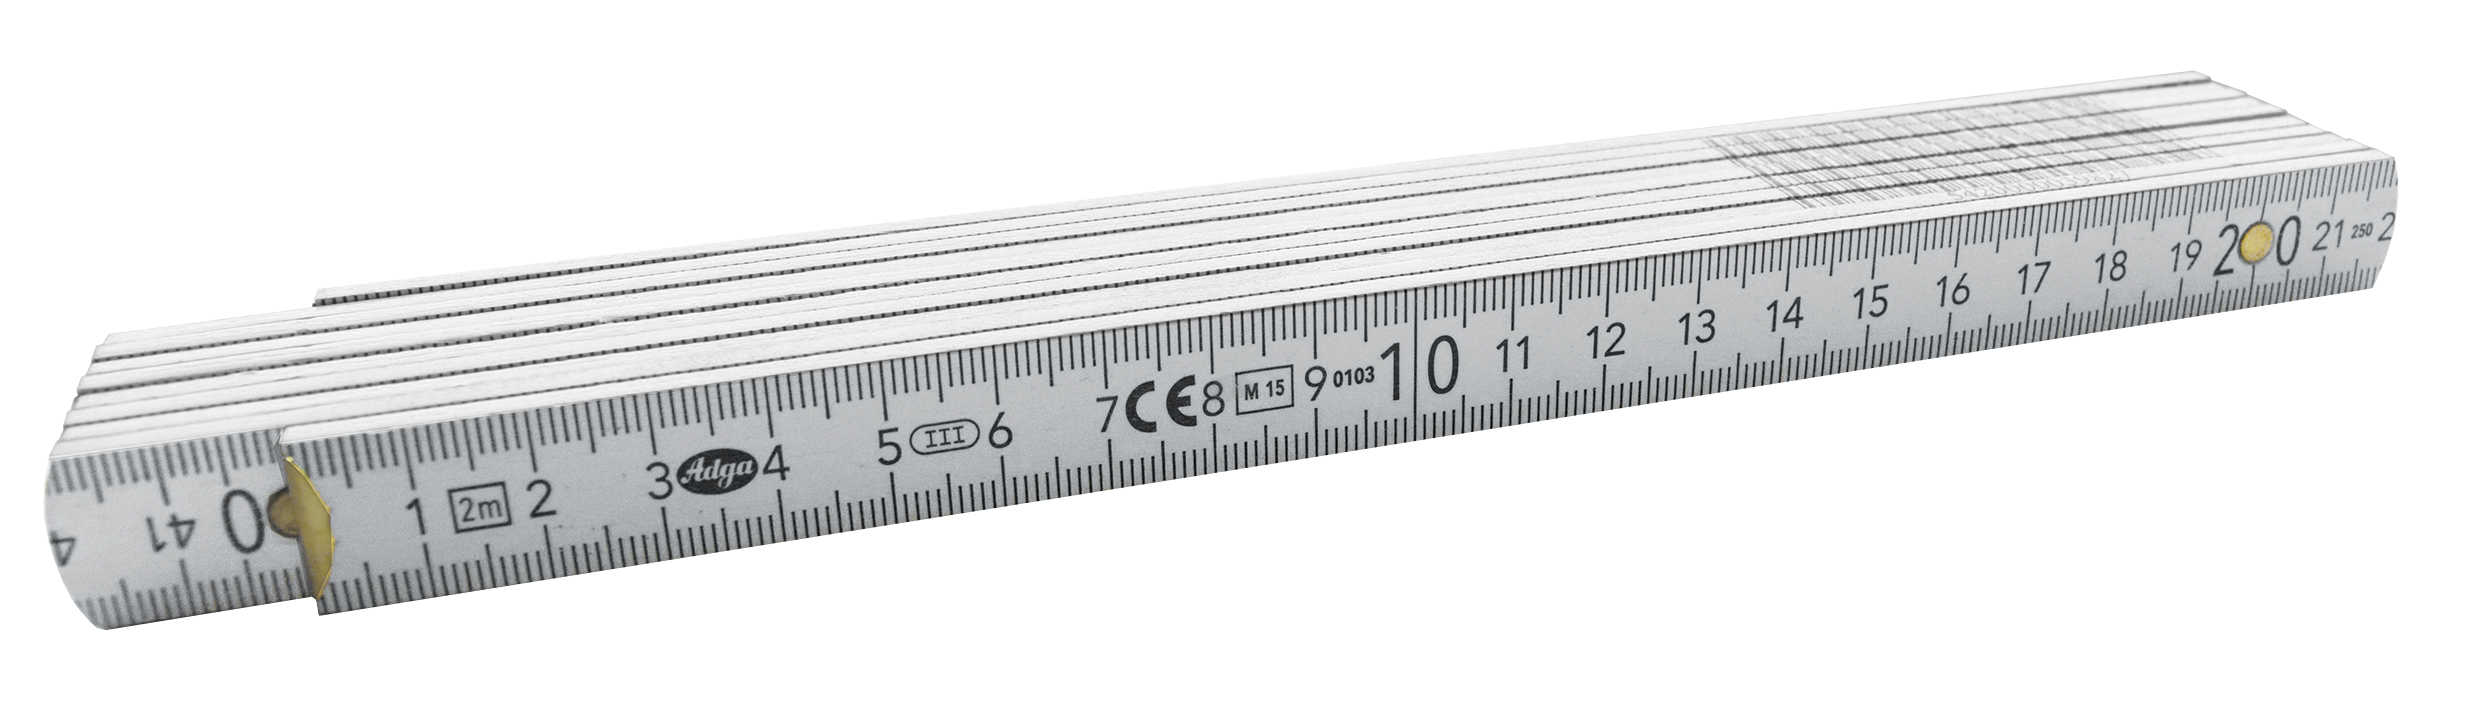 Mètre pliant bois PRO 2 m x 16 mm blanc - type 250 PLUS